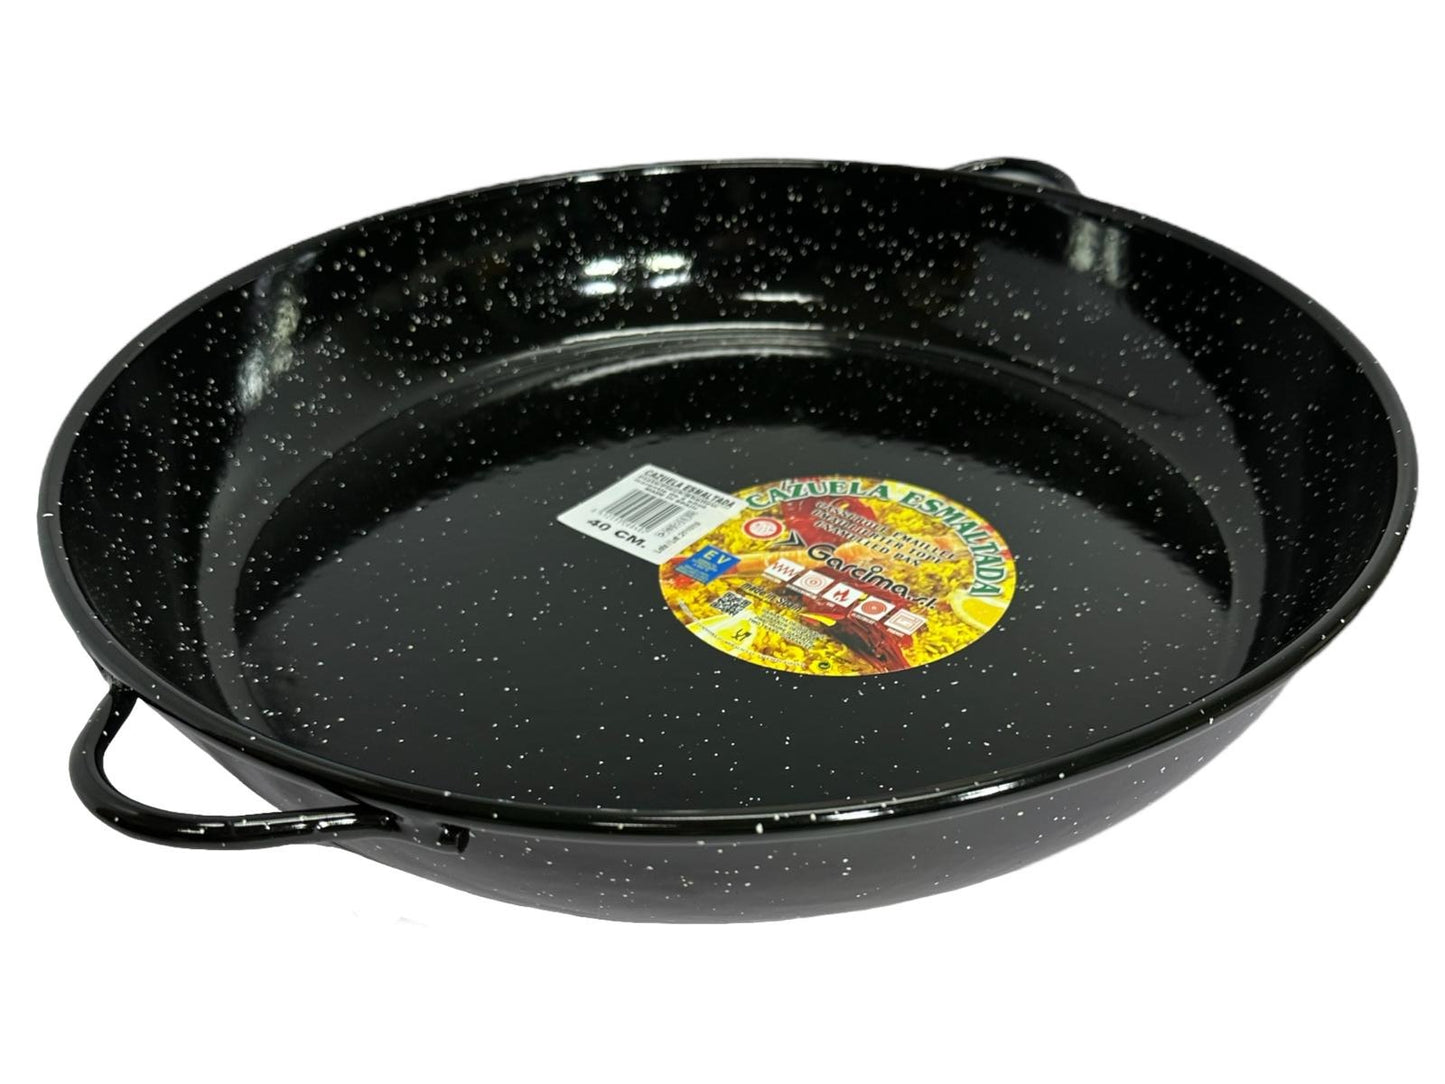 Garcima Cazuela Esmaltada Spanish Enamelled Casserole Dish 40cm